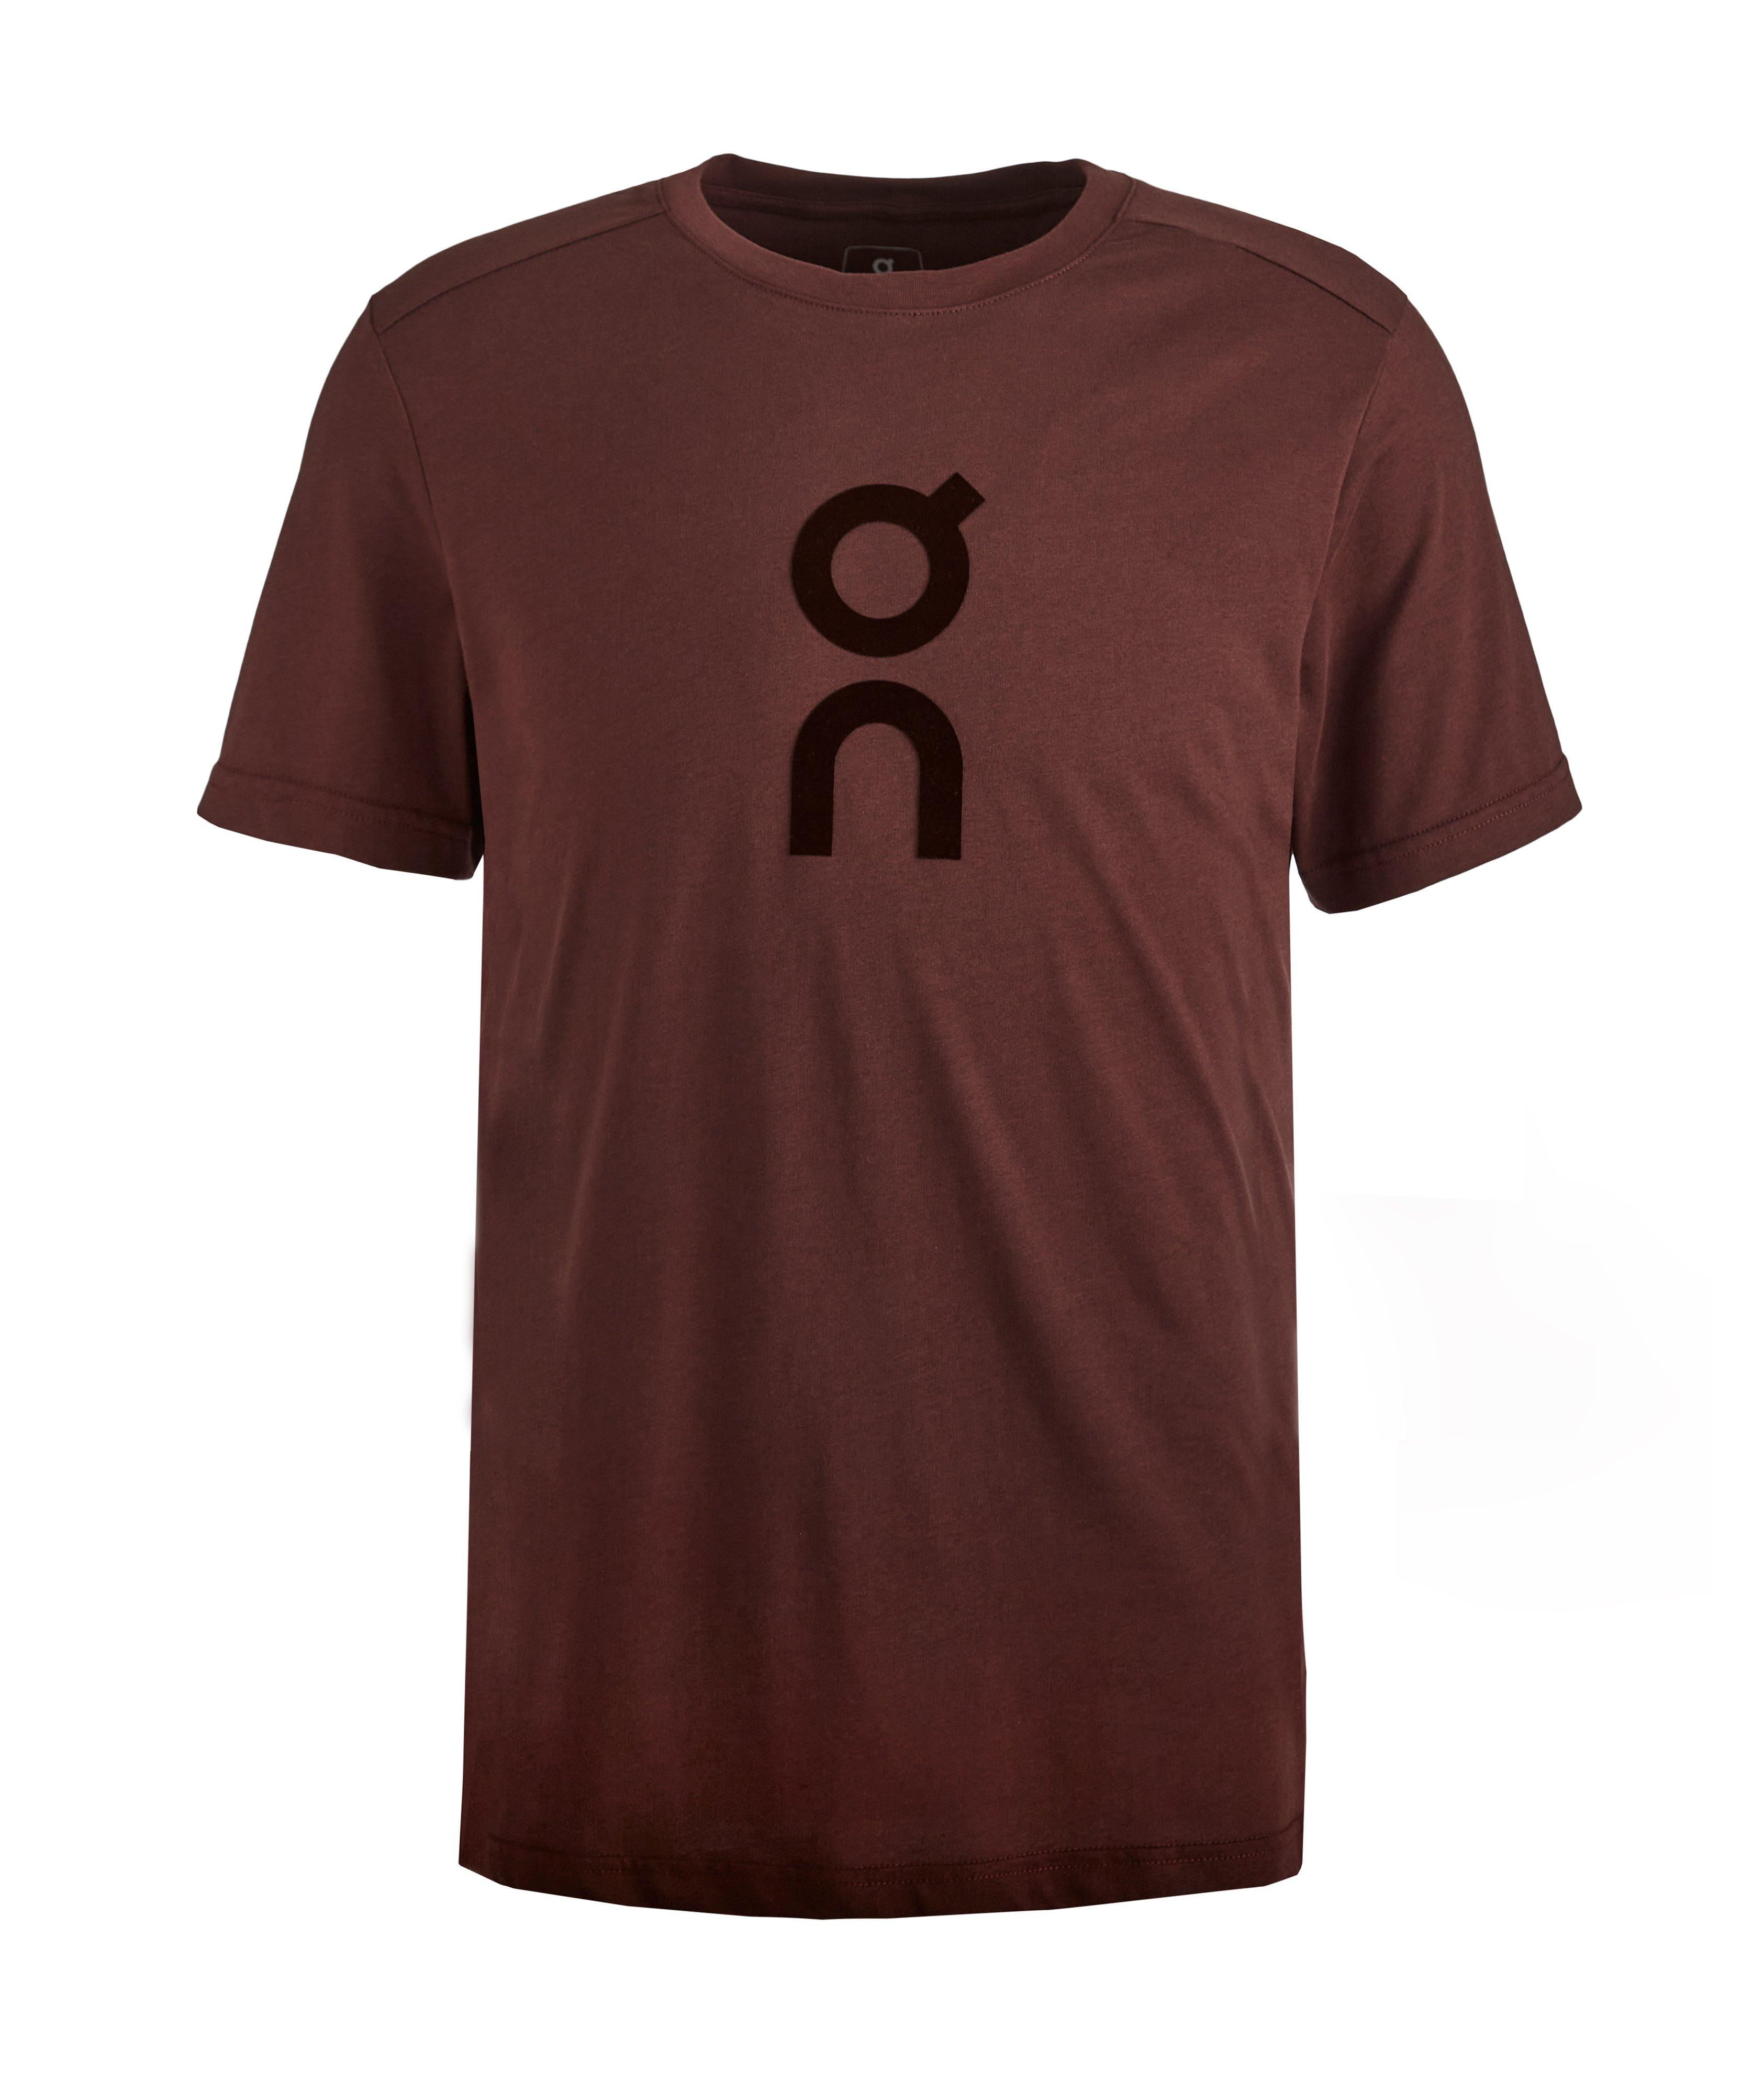 Logo Performance Cotton T-Shirt image 0